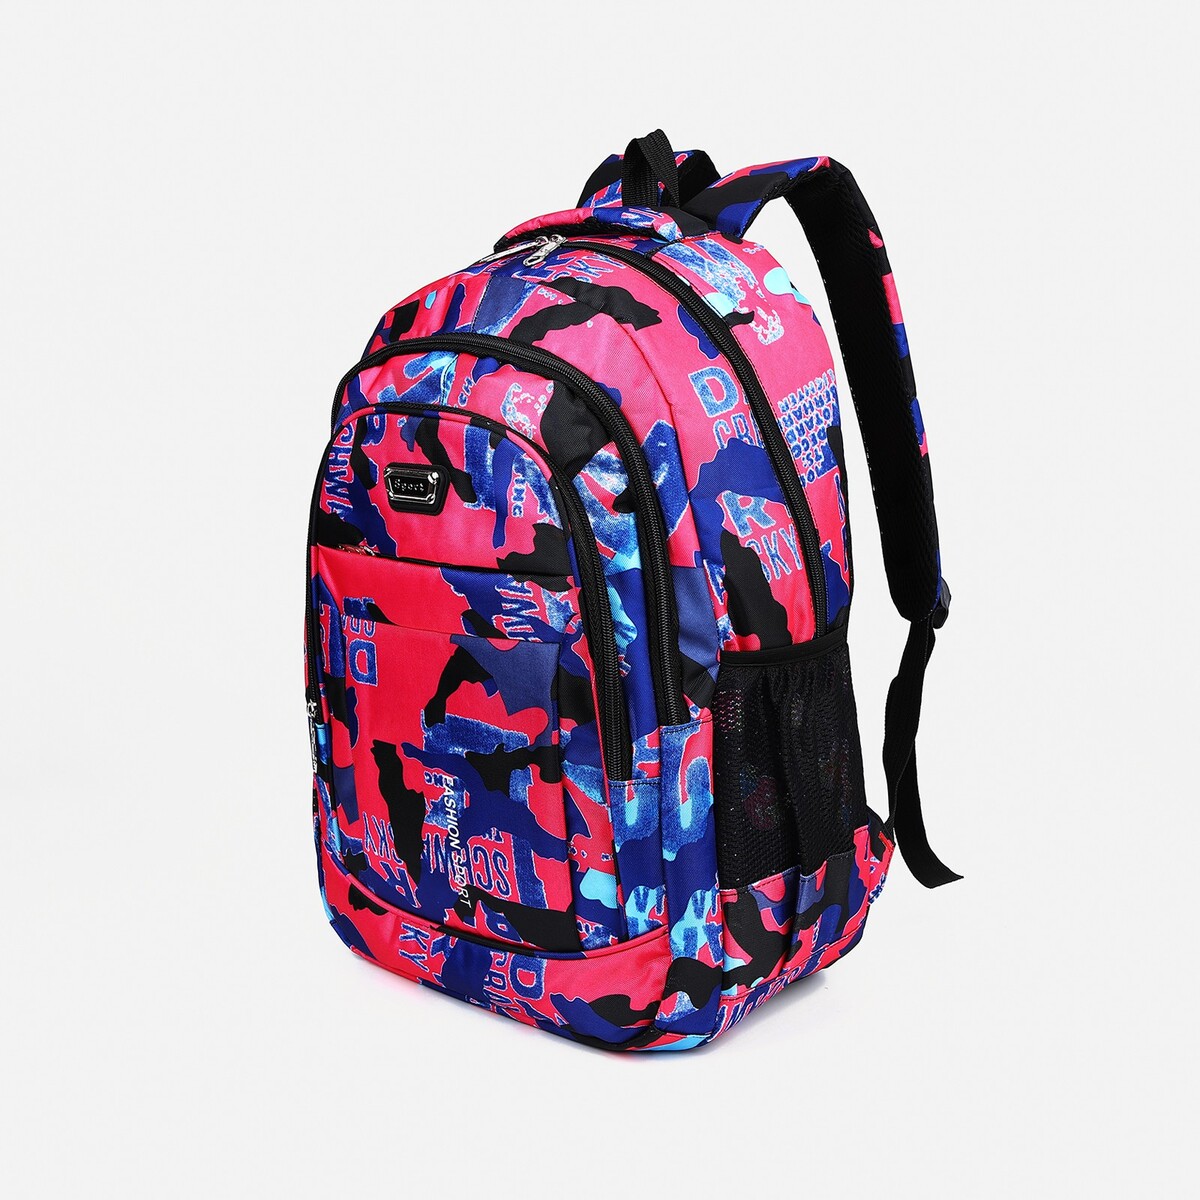 Рюкзак молодежный на молнии из текстиля, 2 кармана, цвет розовый рюкзак молодежный водонепроницаемый на молнии 3 кармана голубой розовый